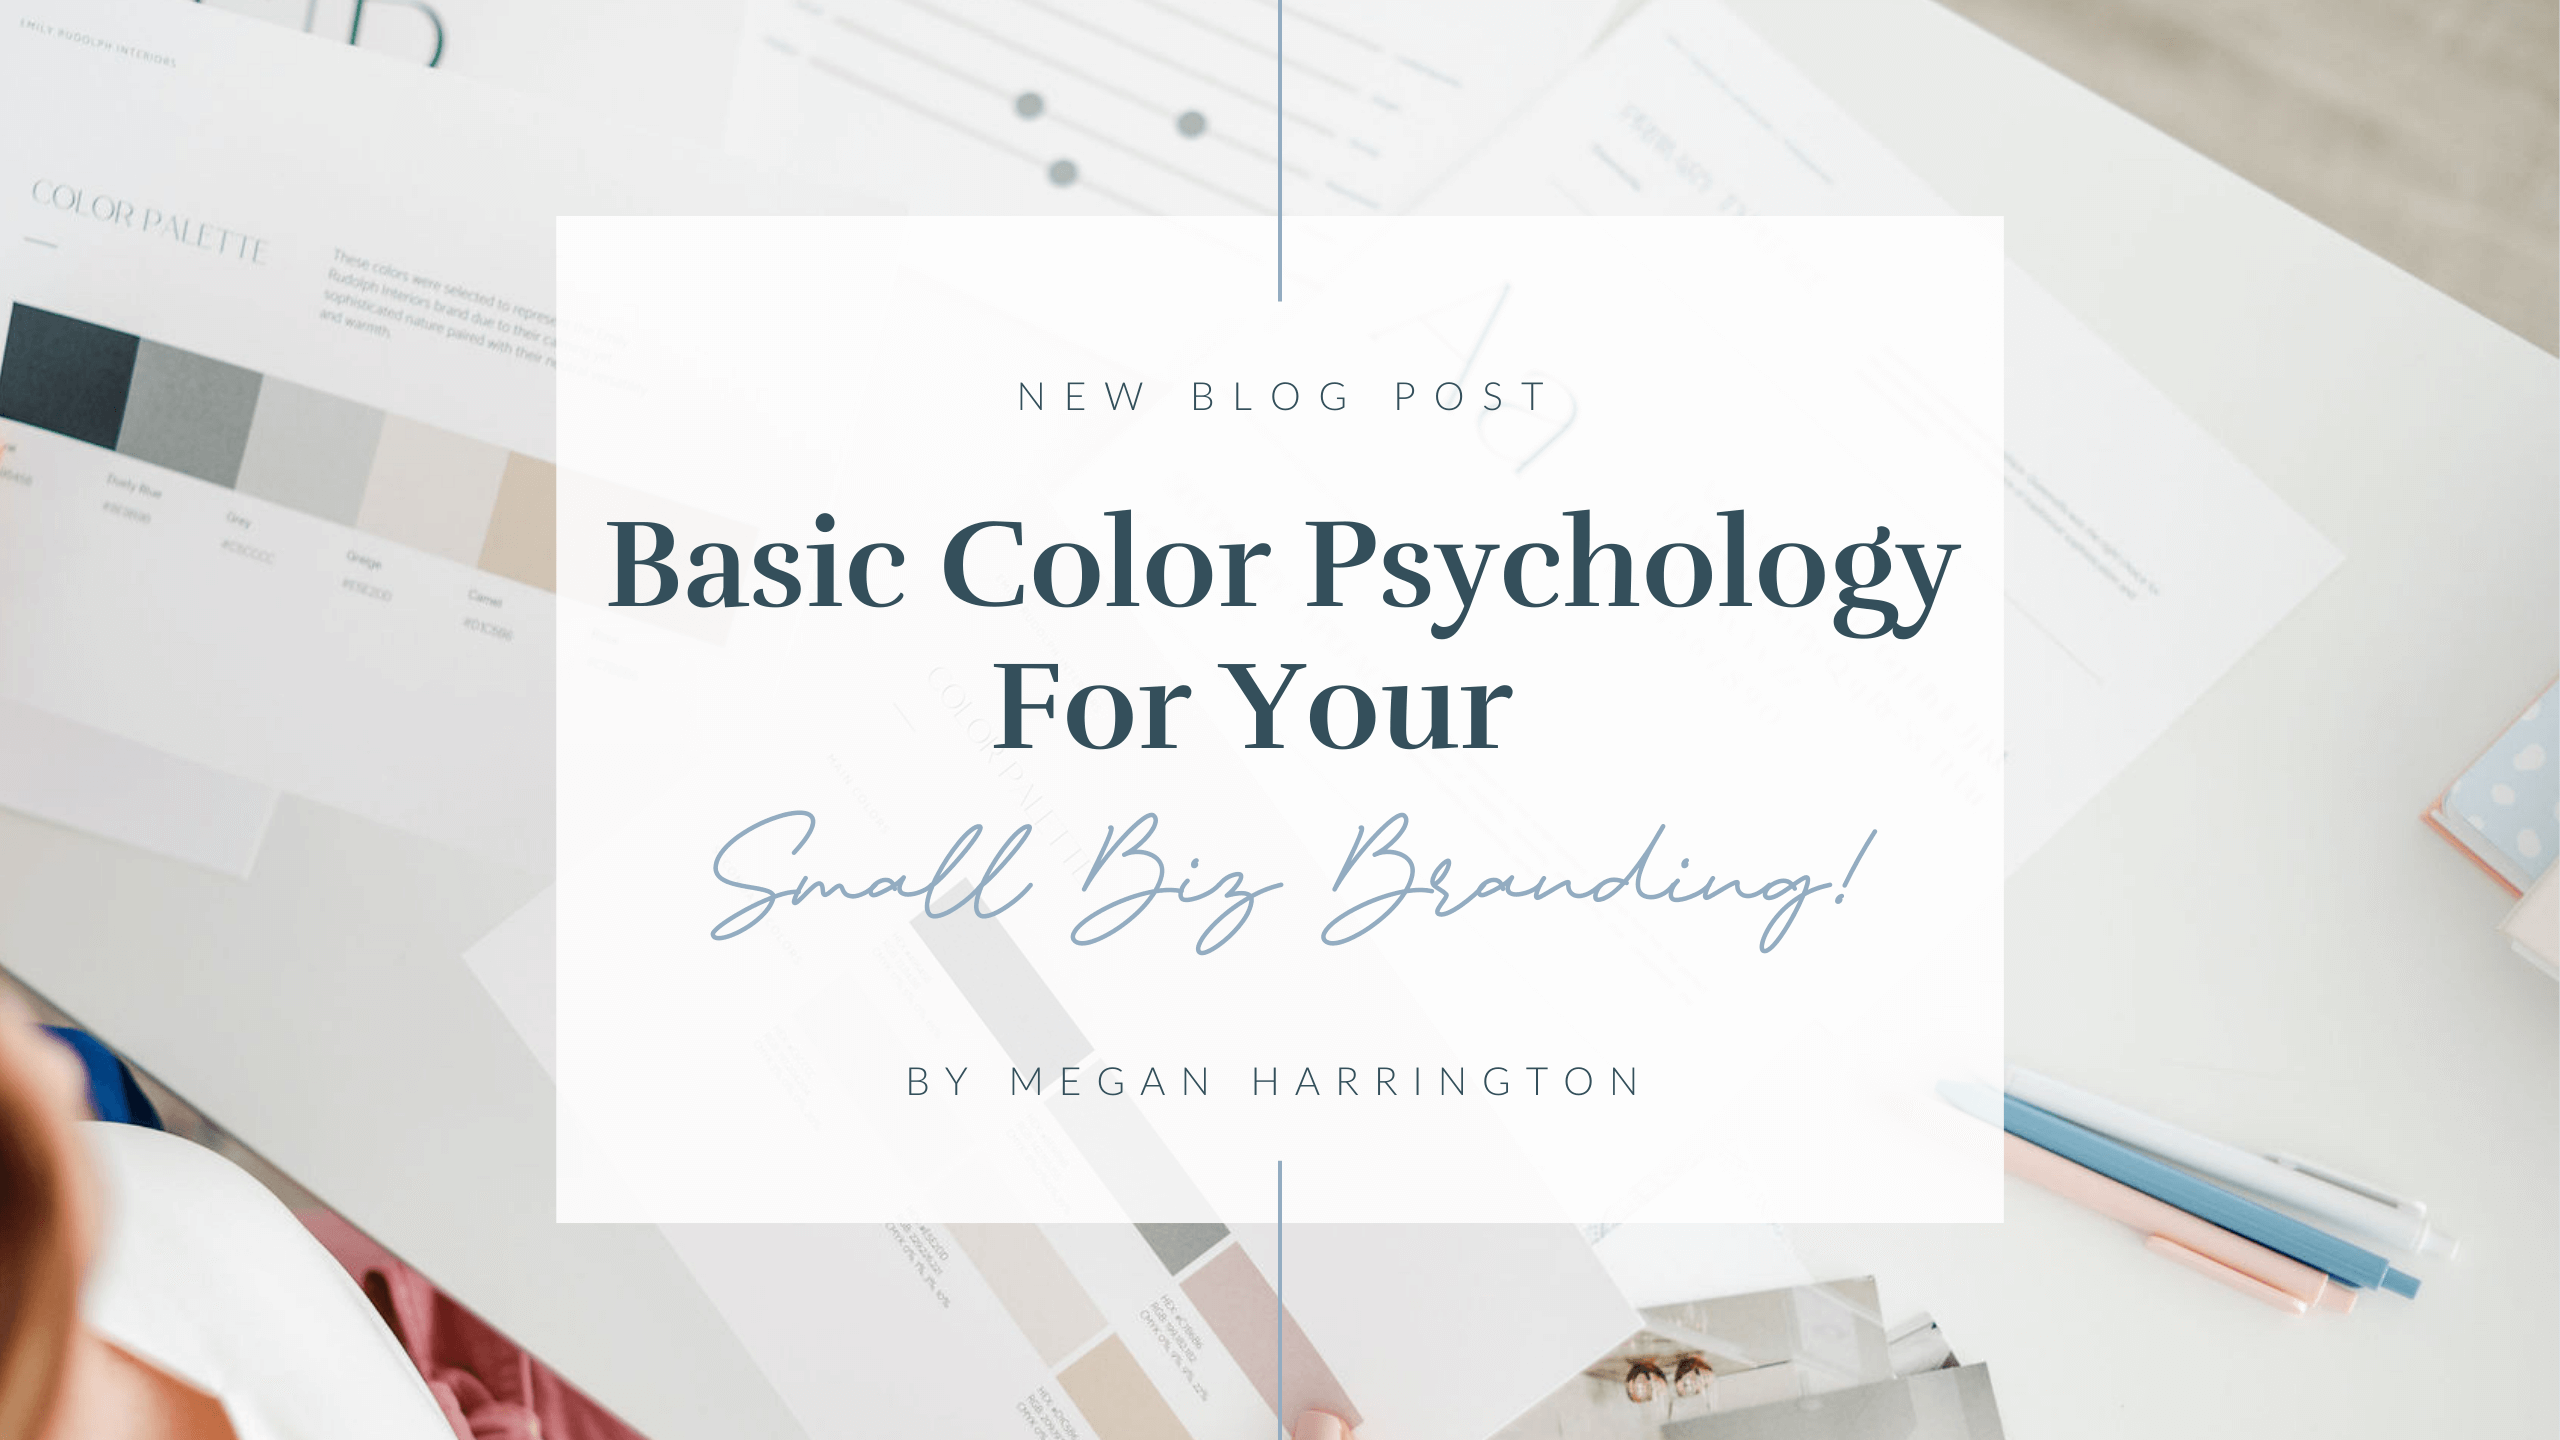 Basic Color Psychology For Your Small Biz Branding